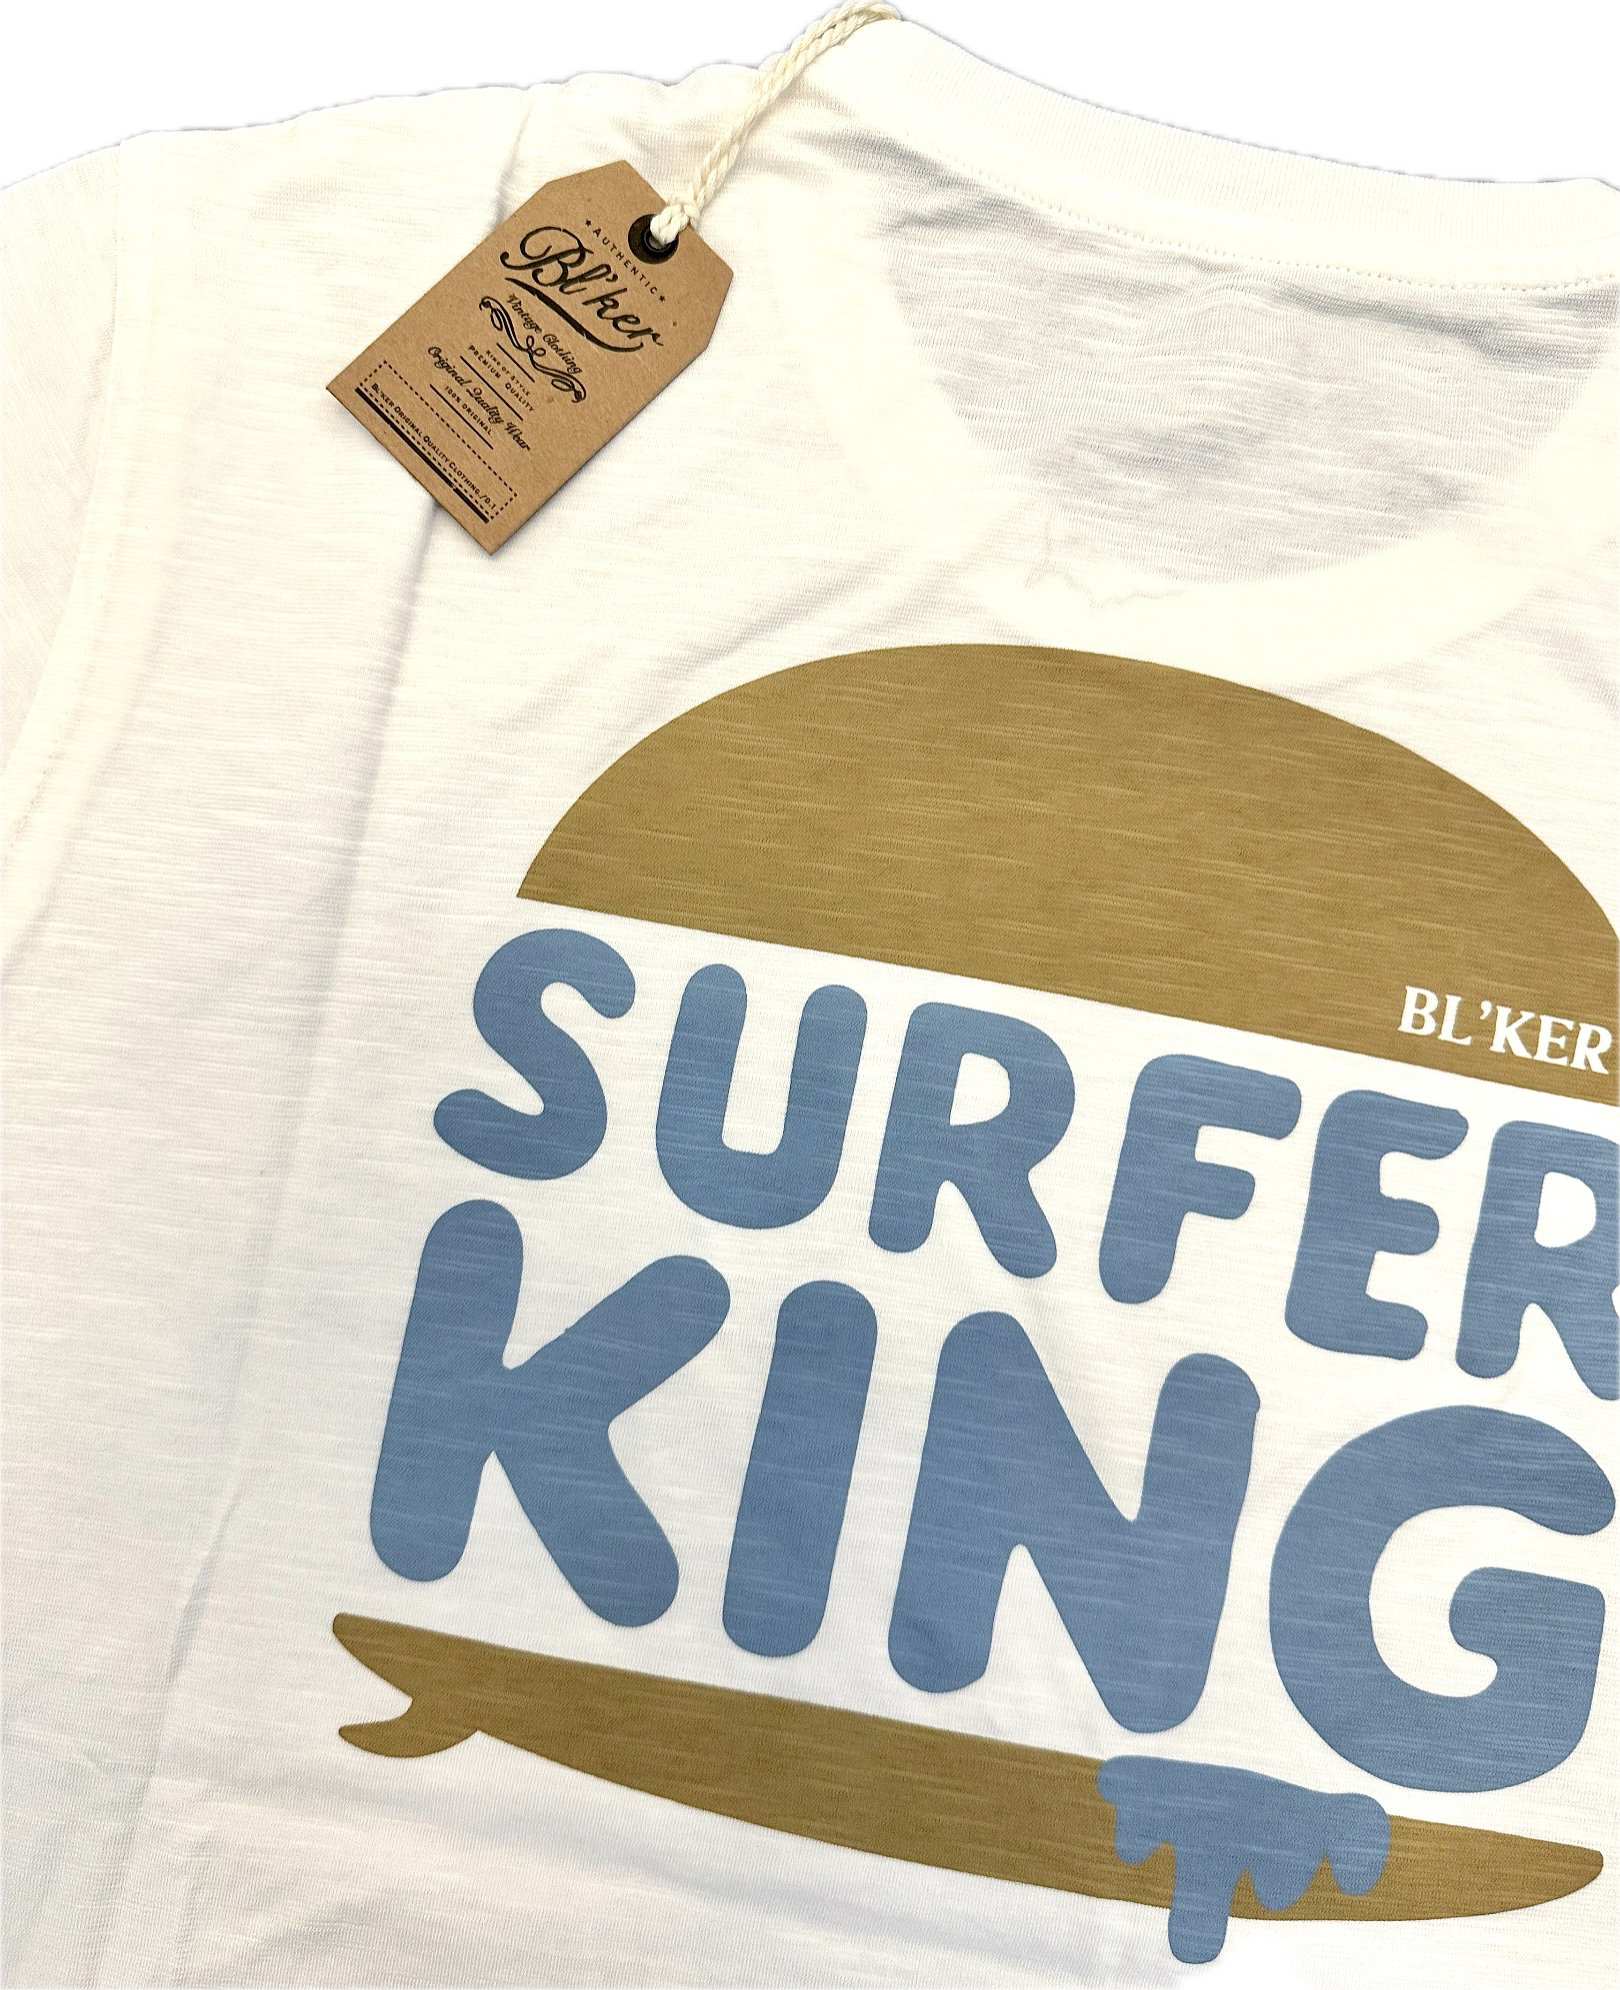 T-shirt cotone "Surfer King" BL'KER